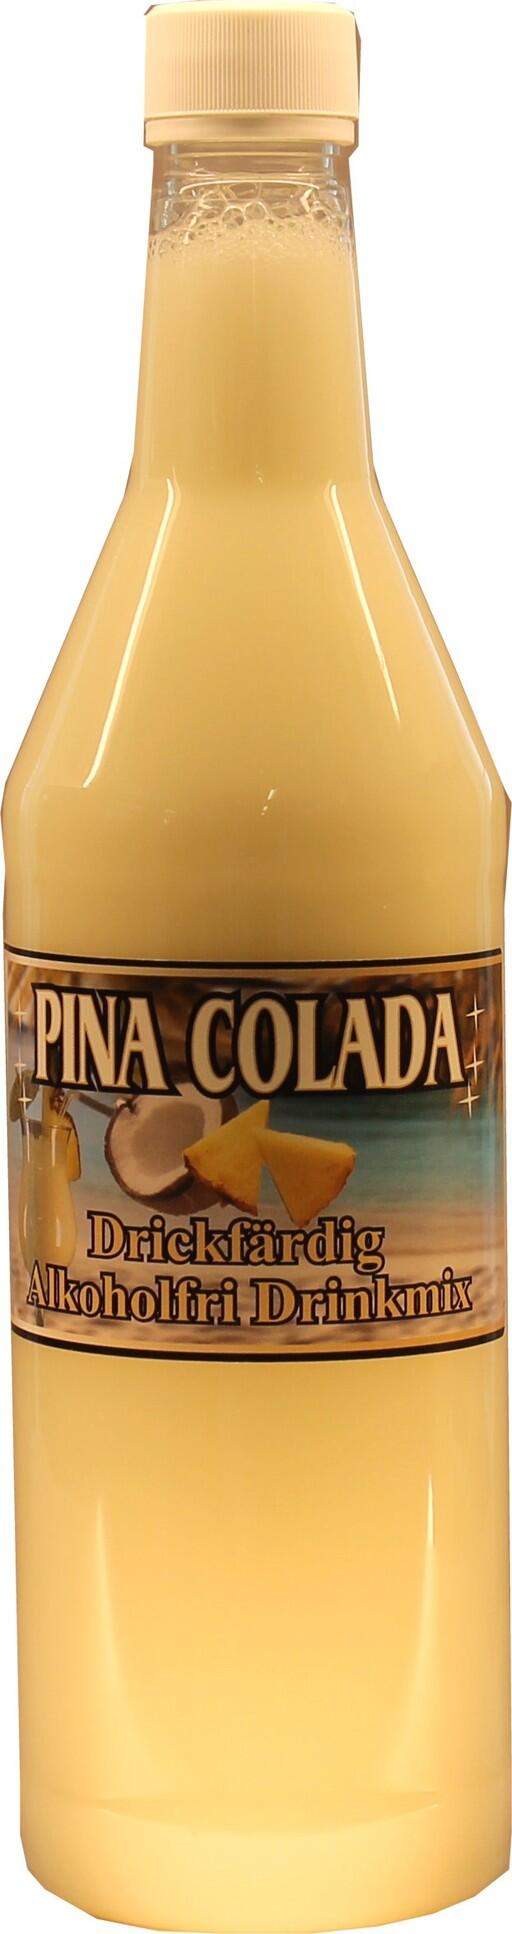 Pina Colada 75 cl